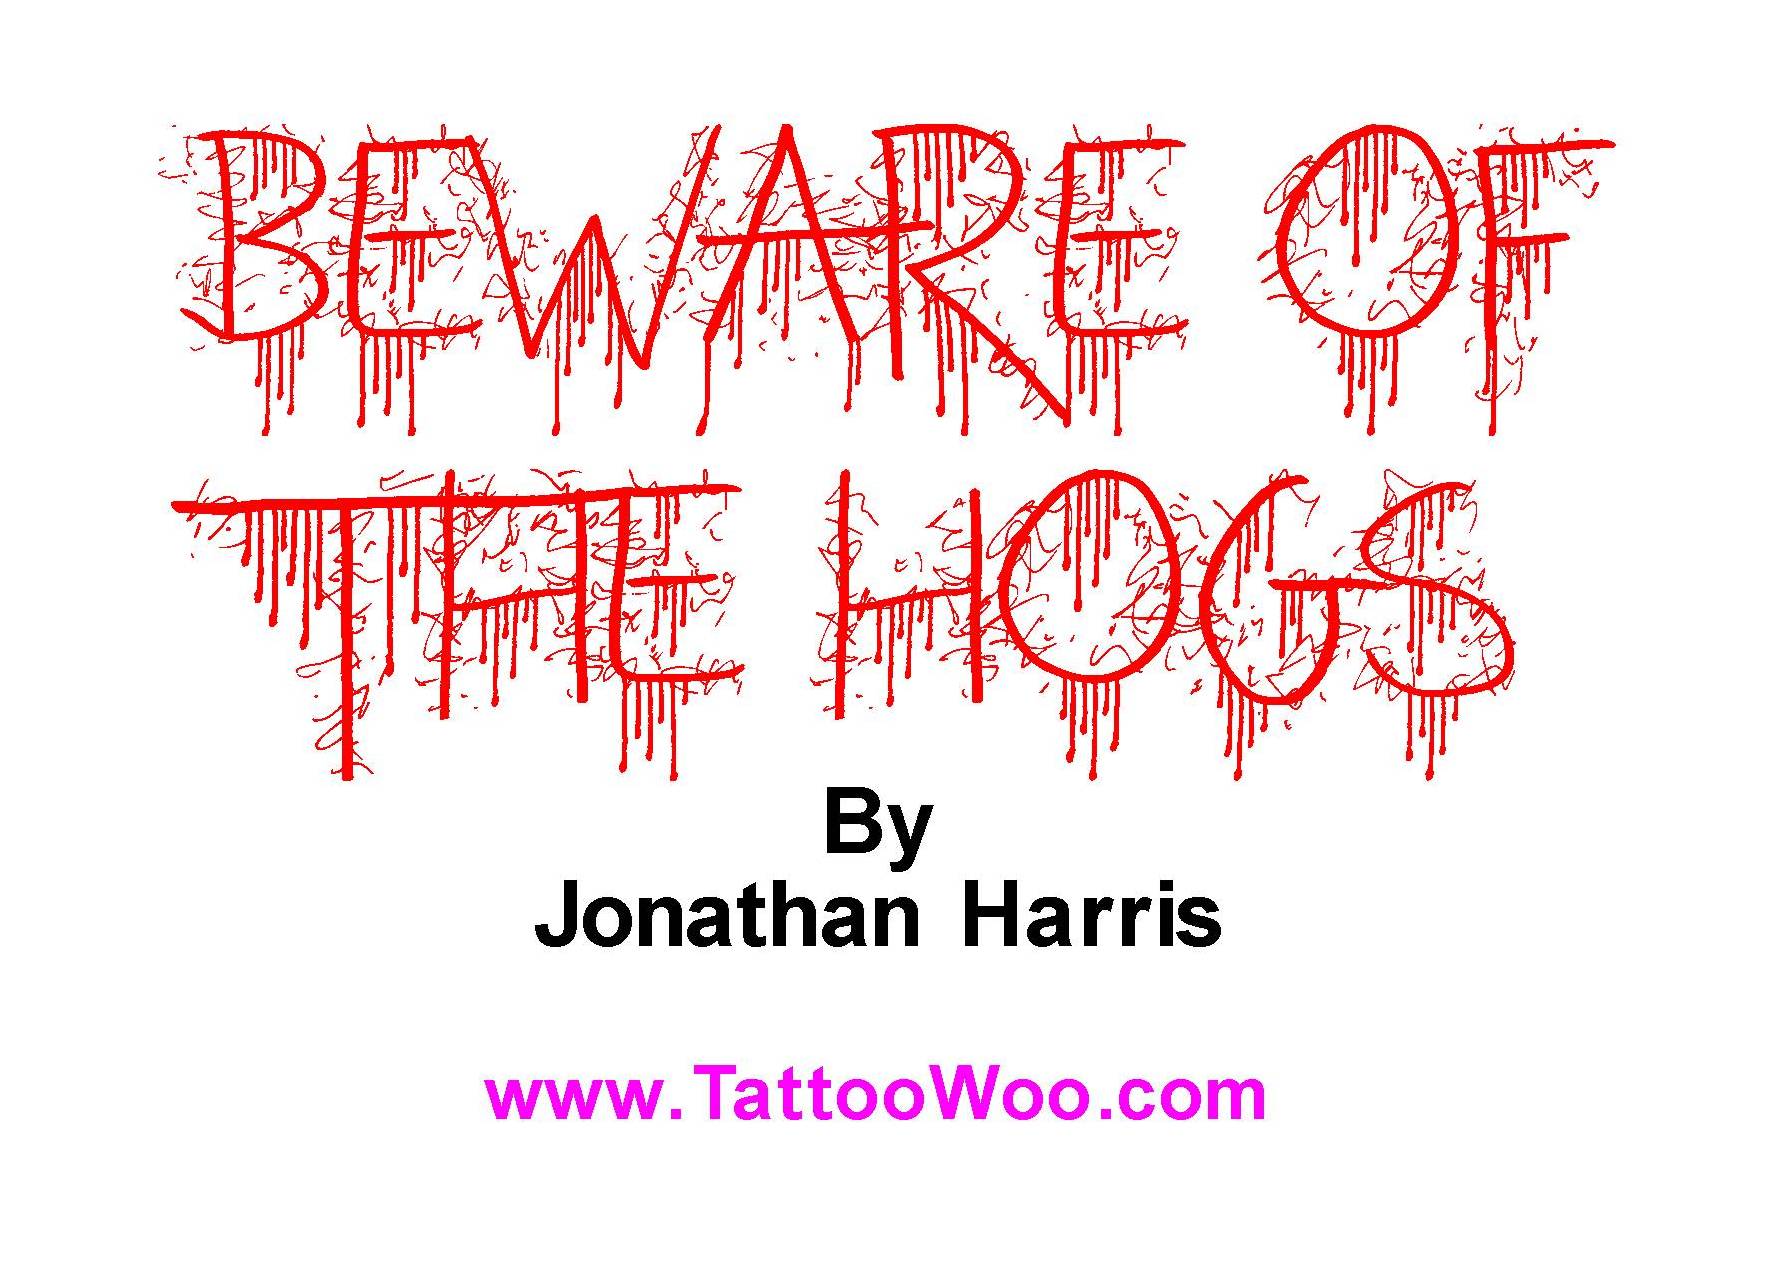 Beware of the Hogs